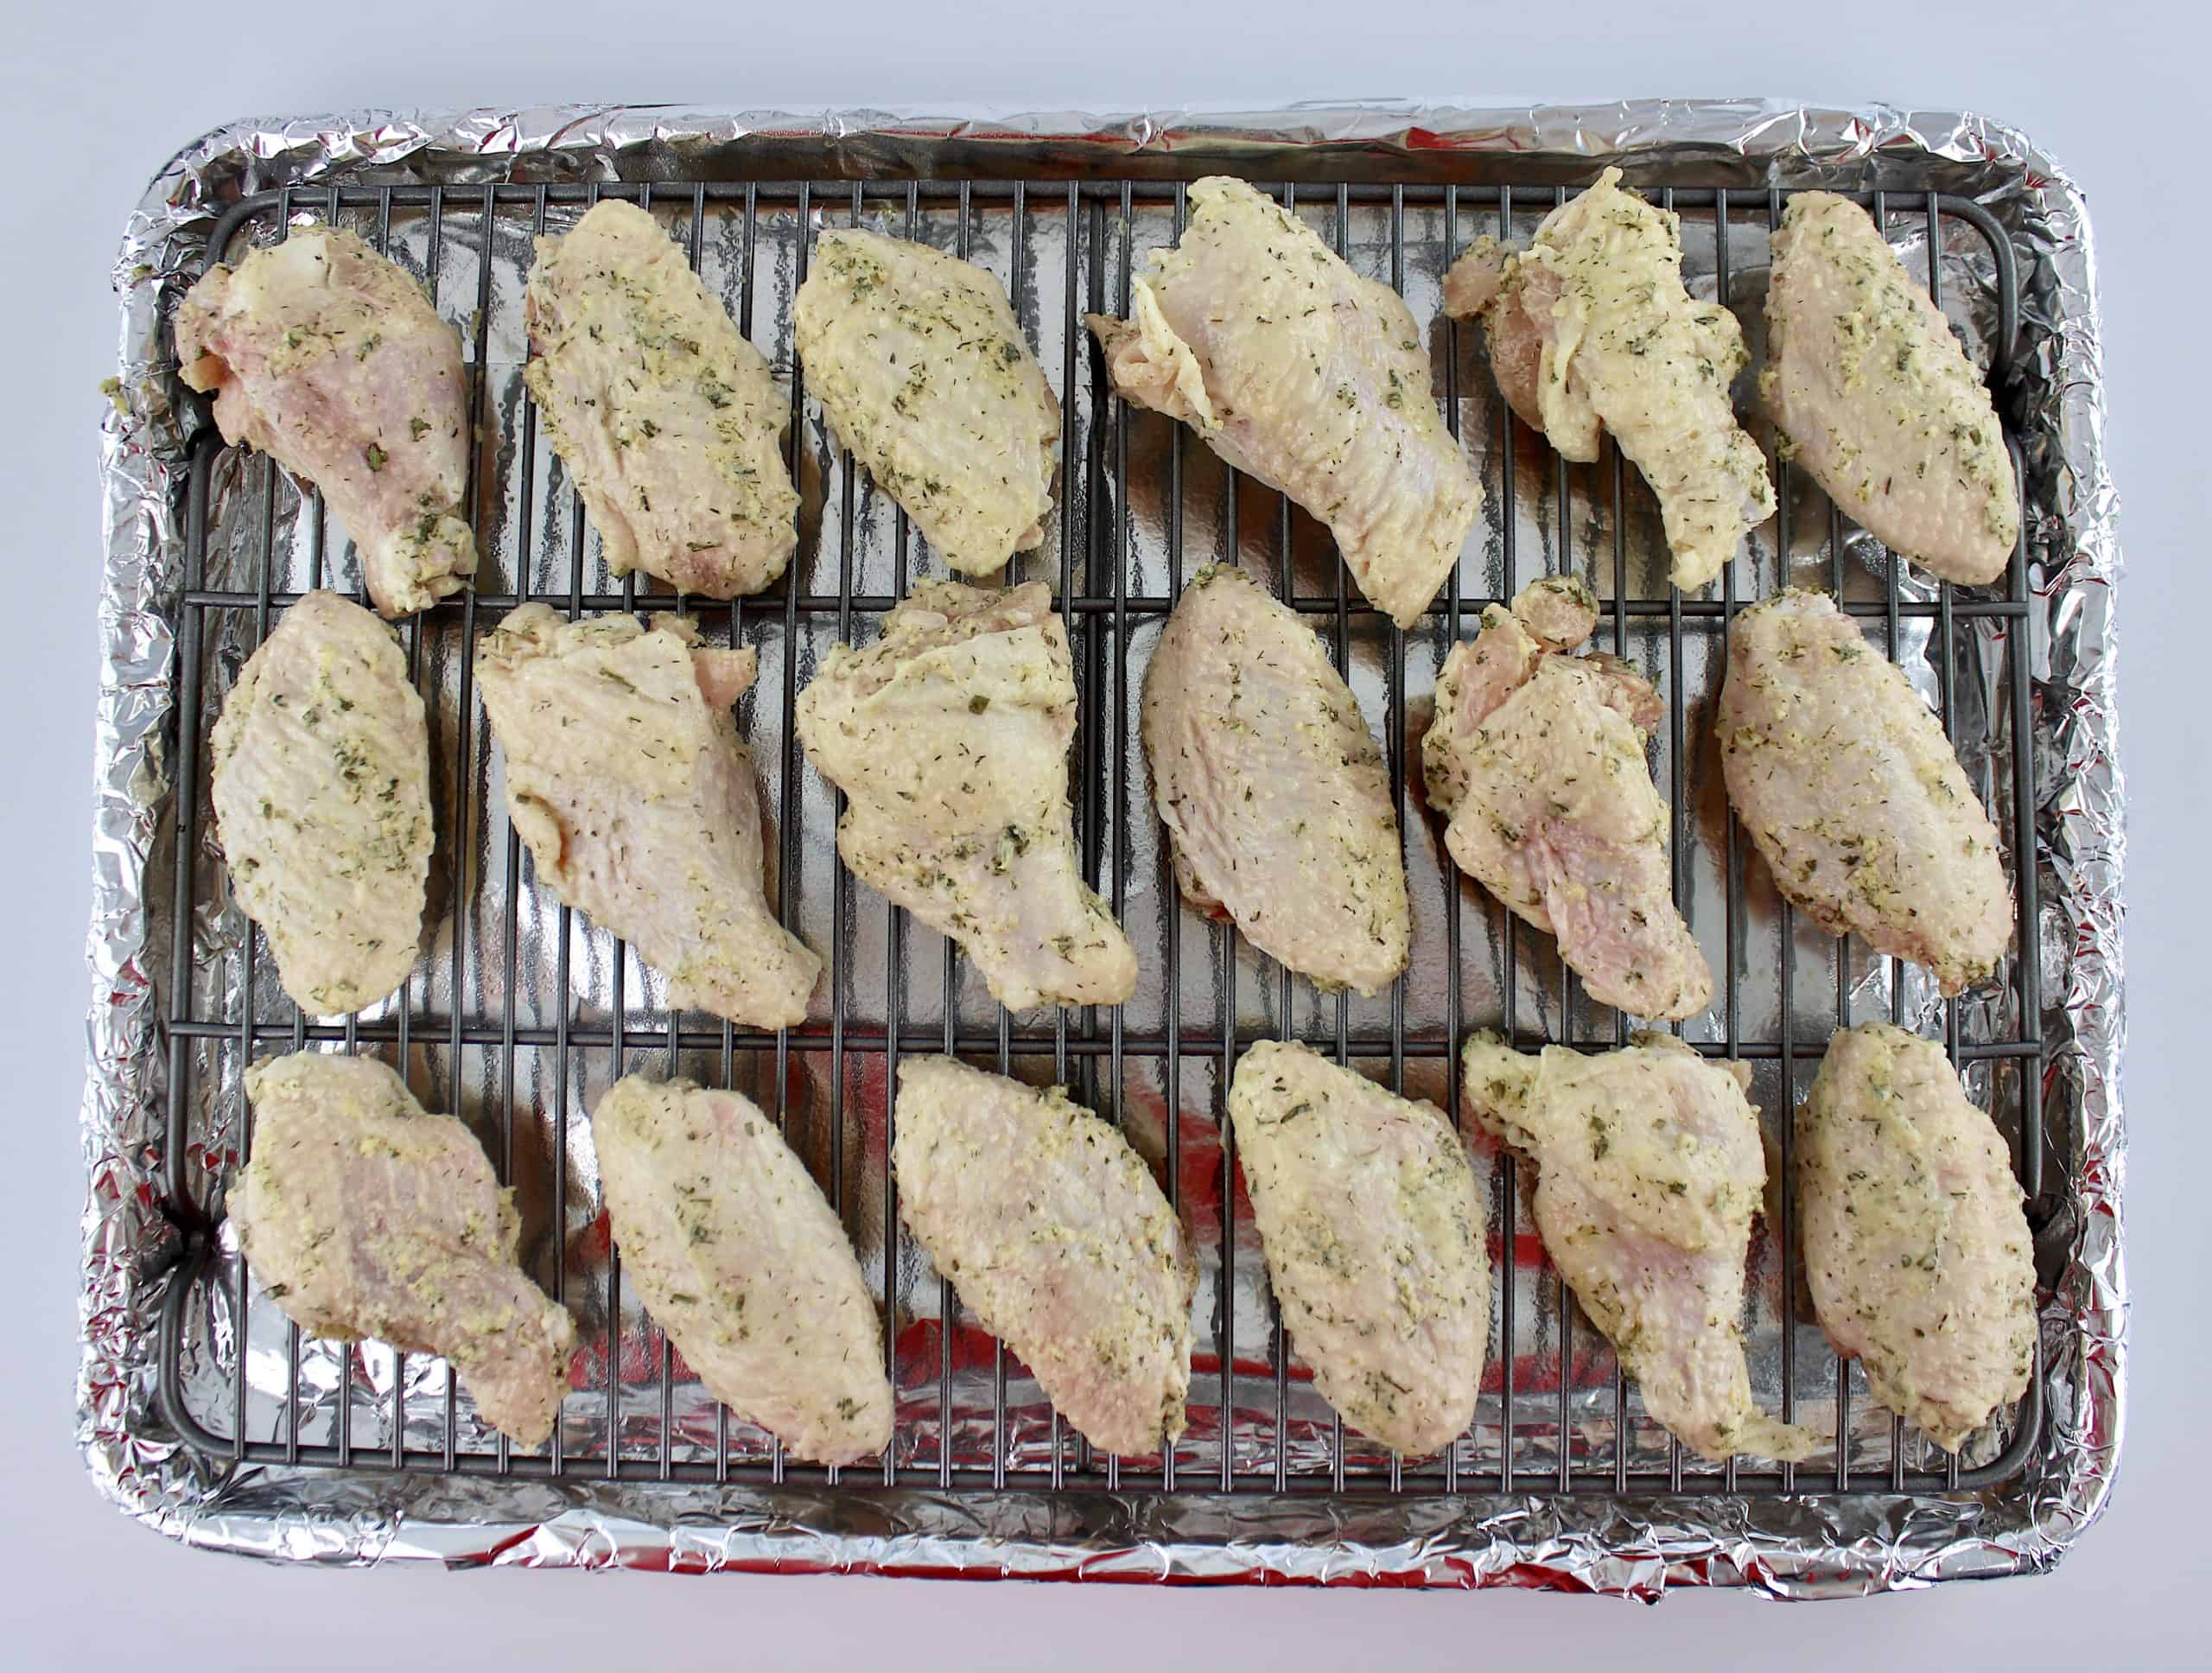 raw seasoned chicken wings on baking sheet with wire rack